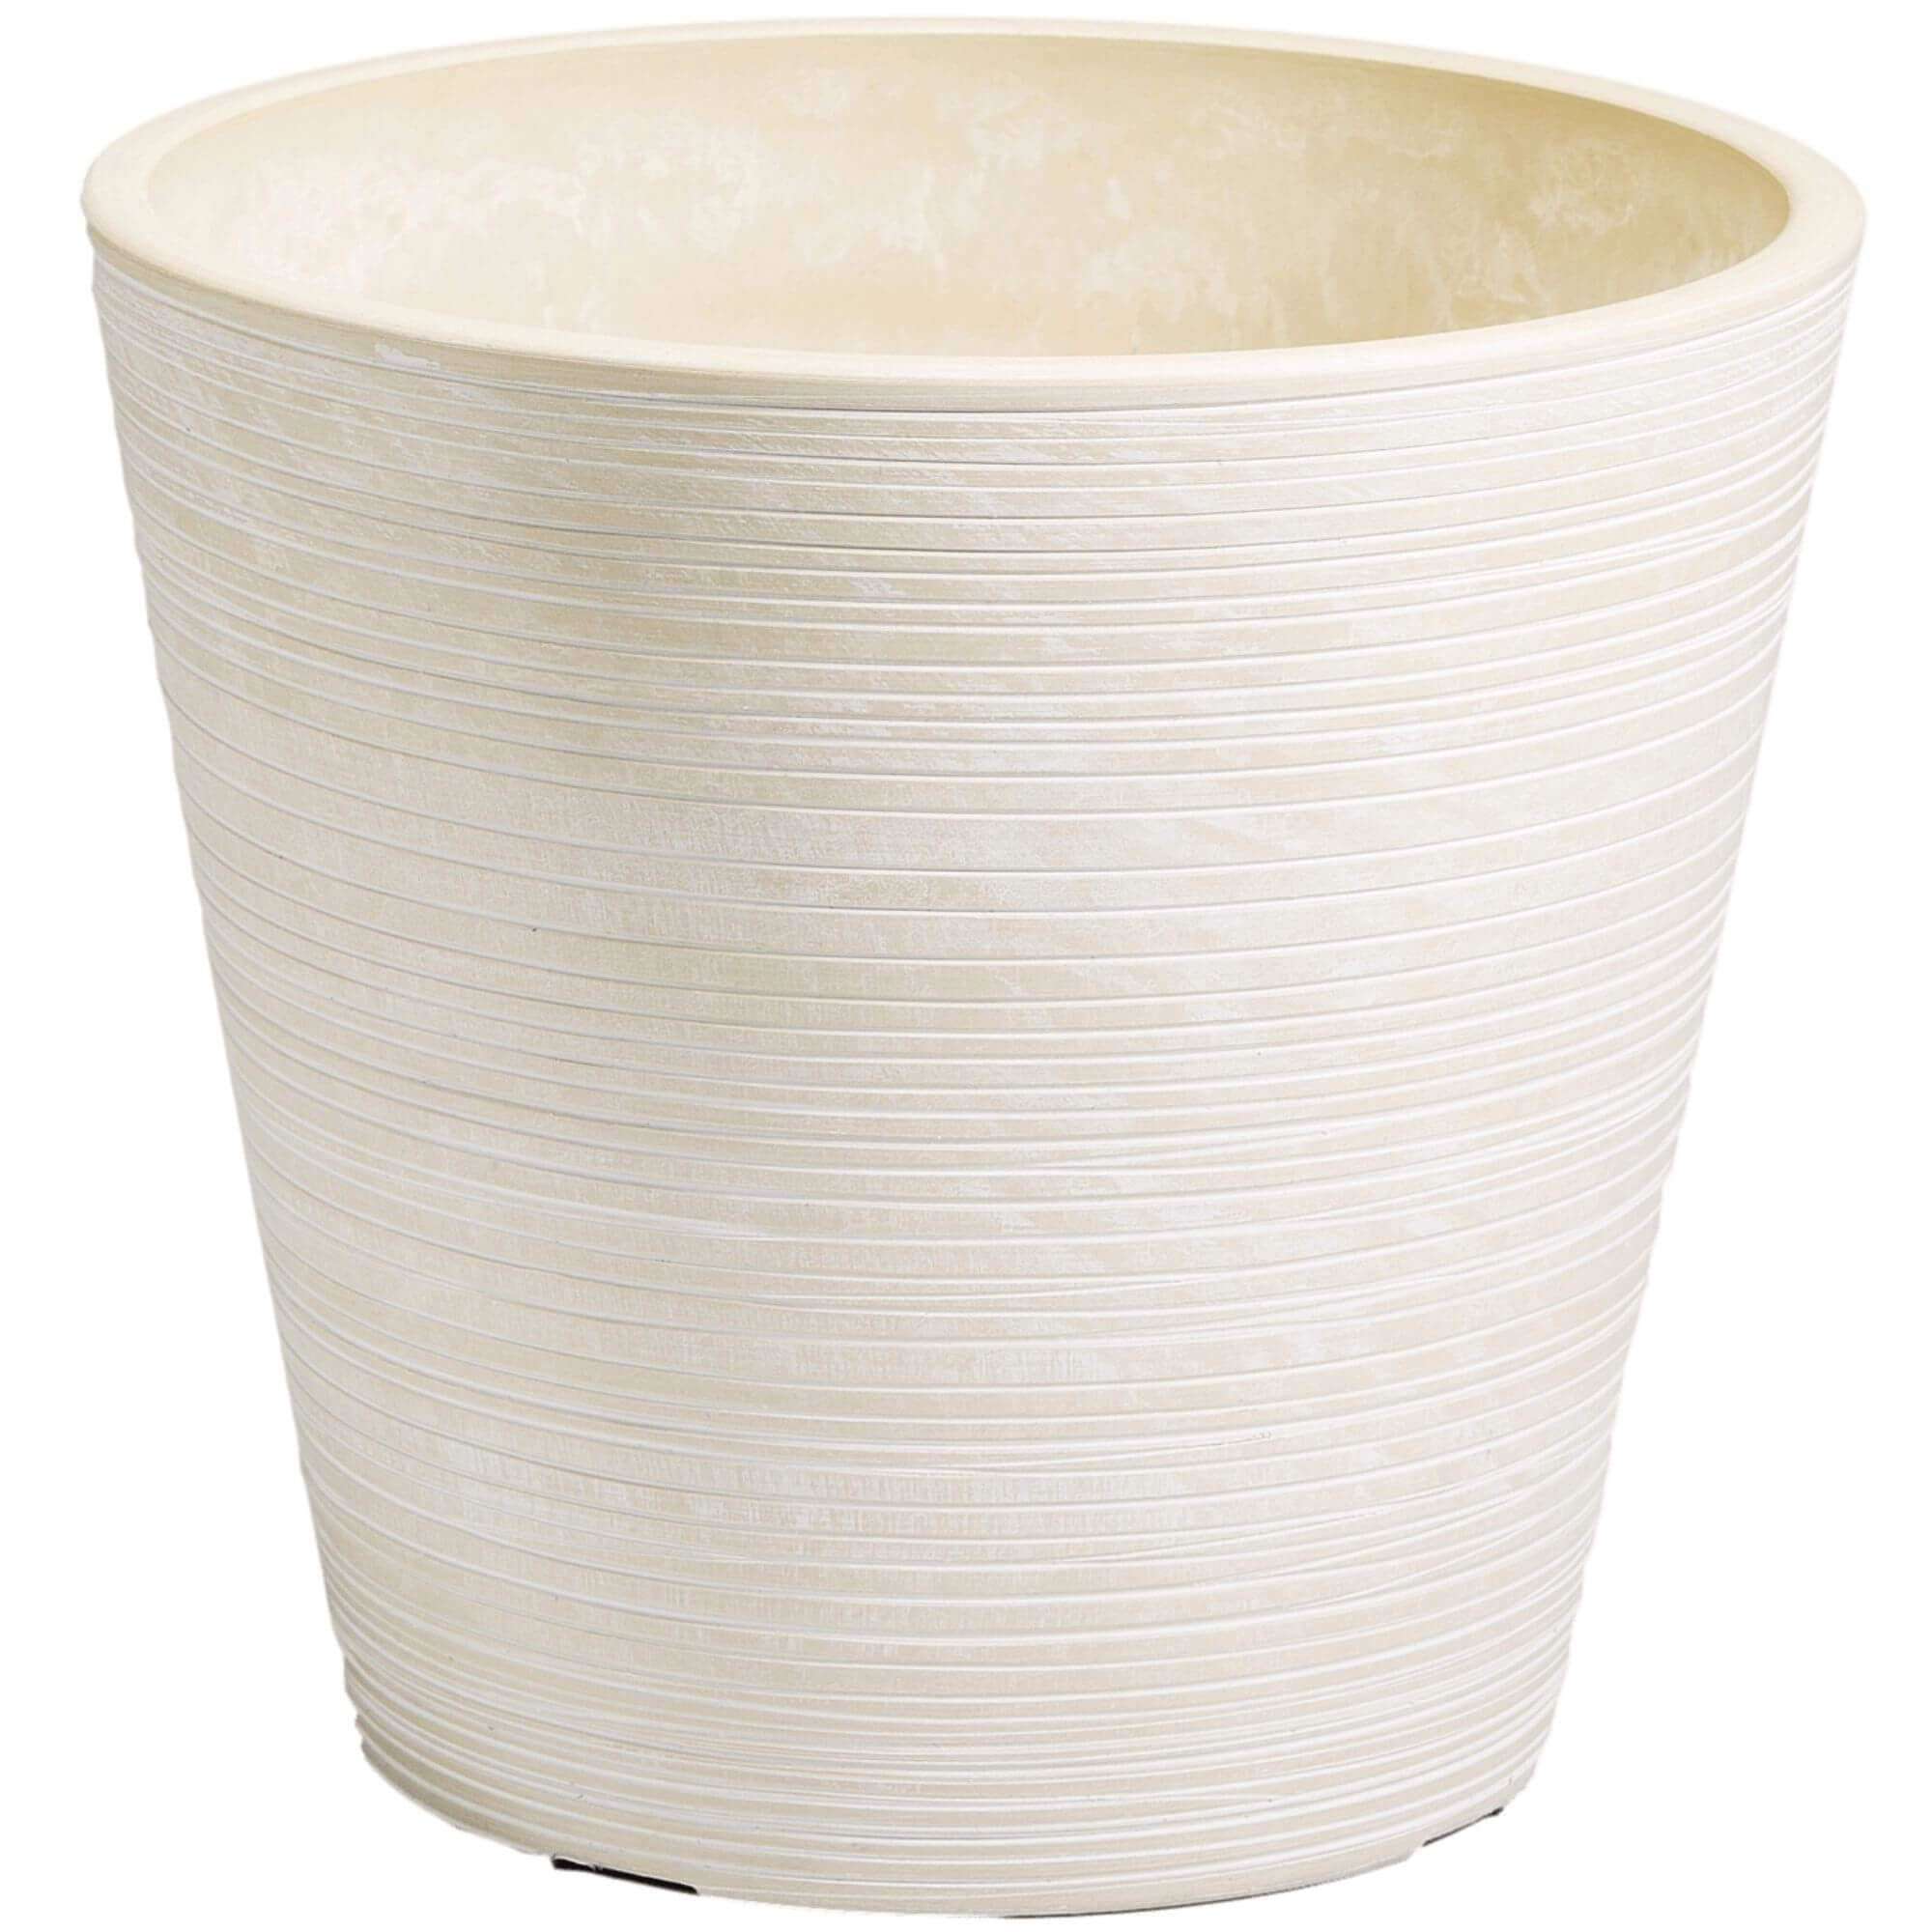 Cream and White Engraved Pot 14cm - Designer Vertical Gardens Pots